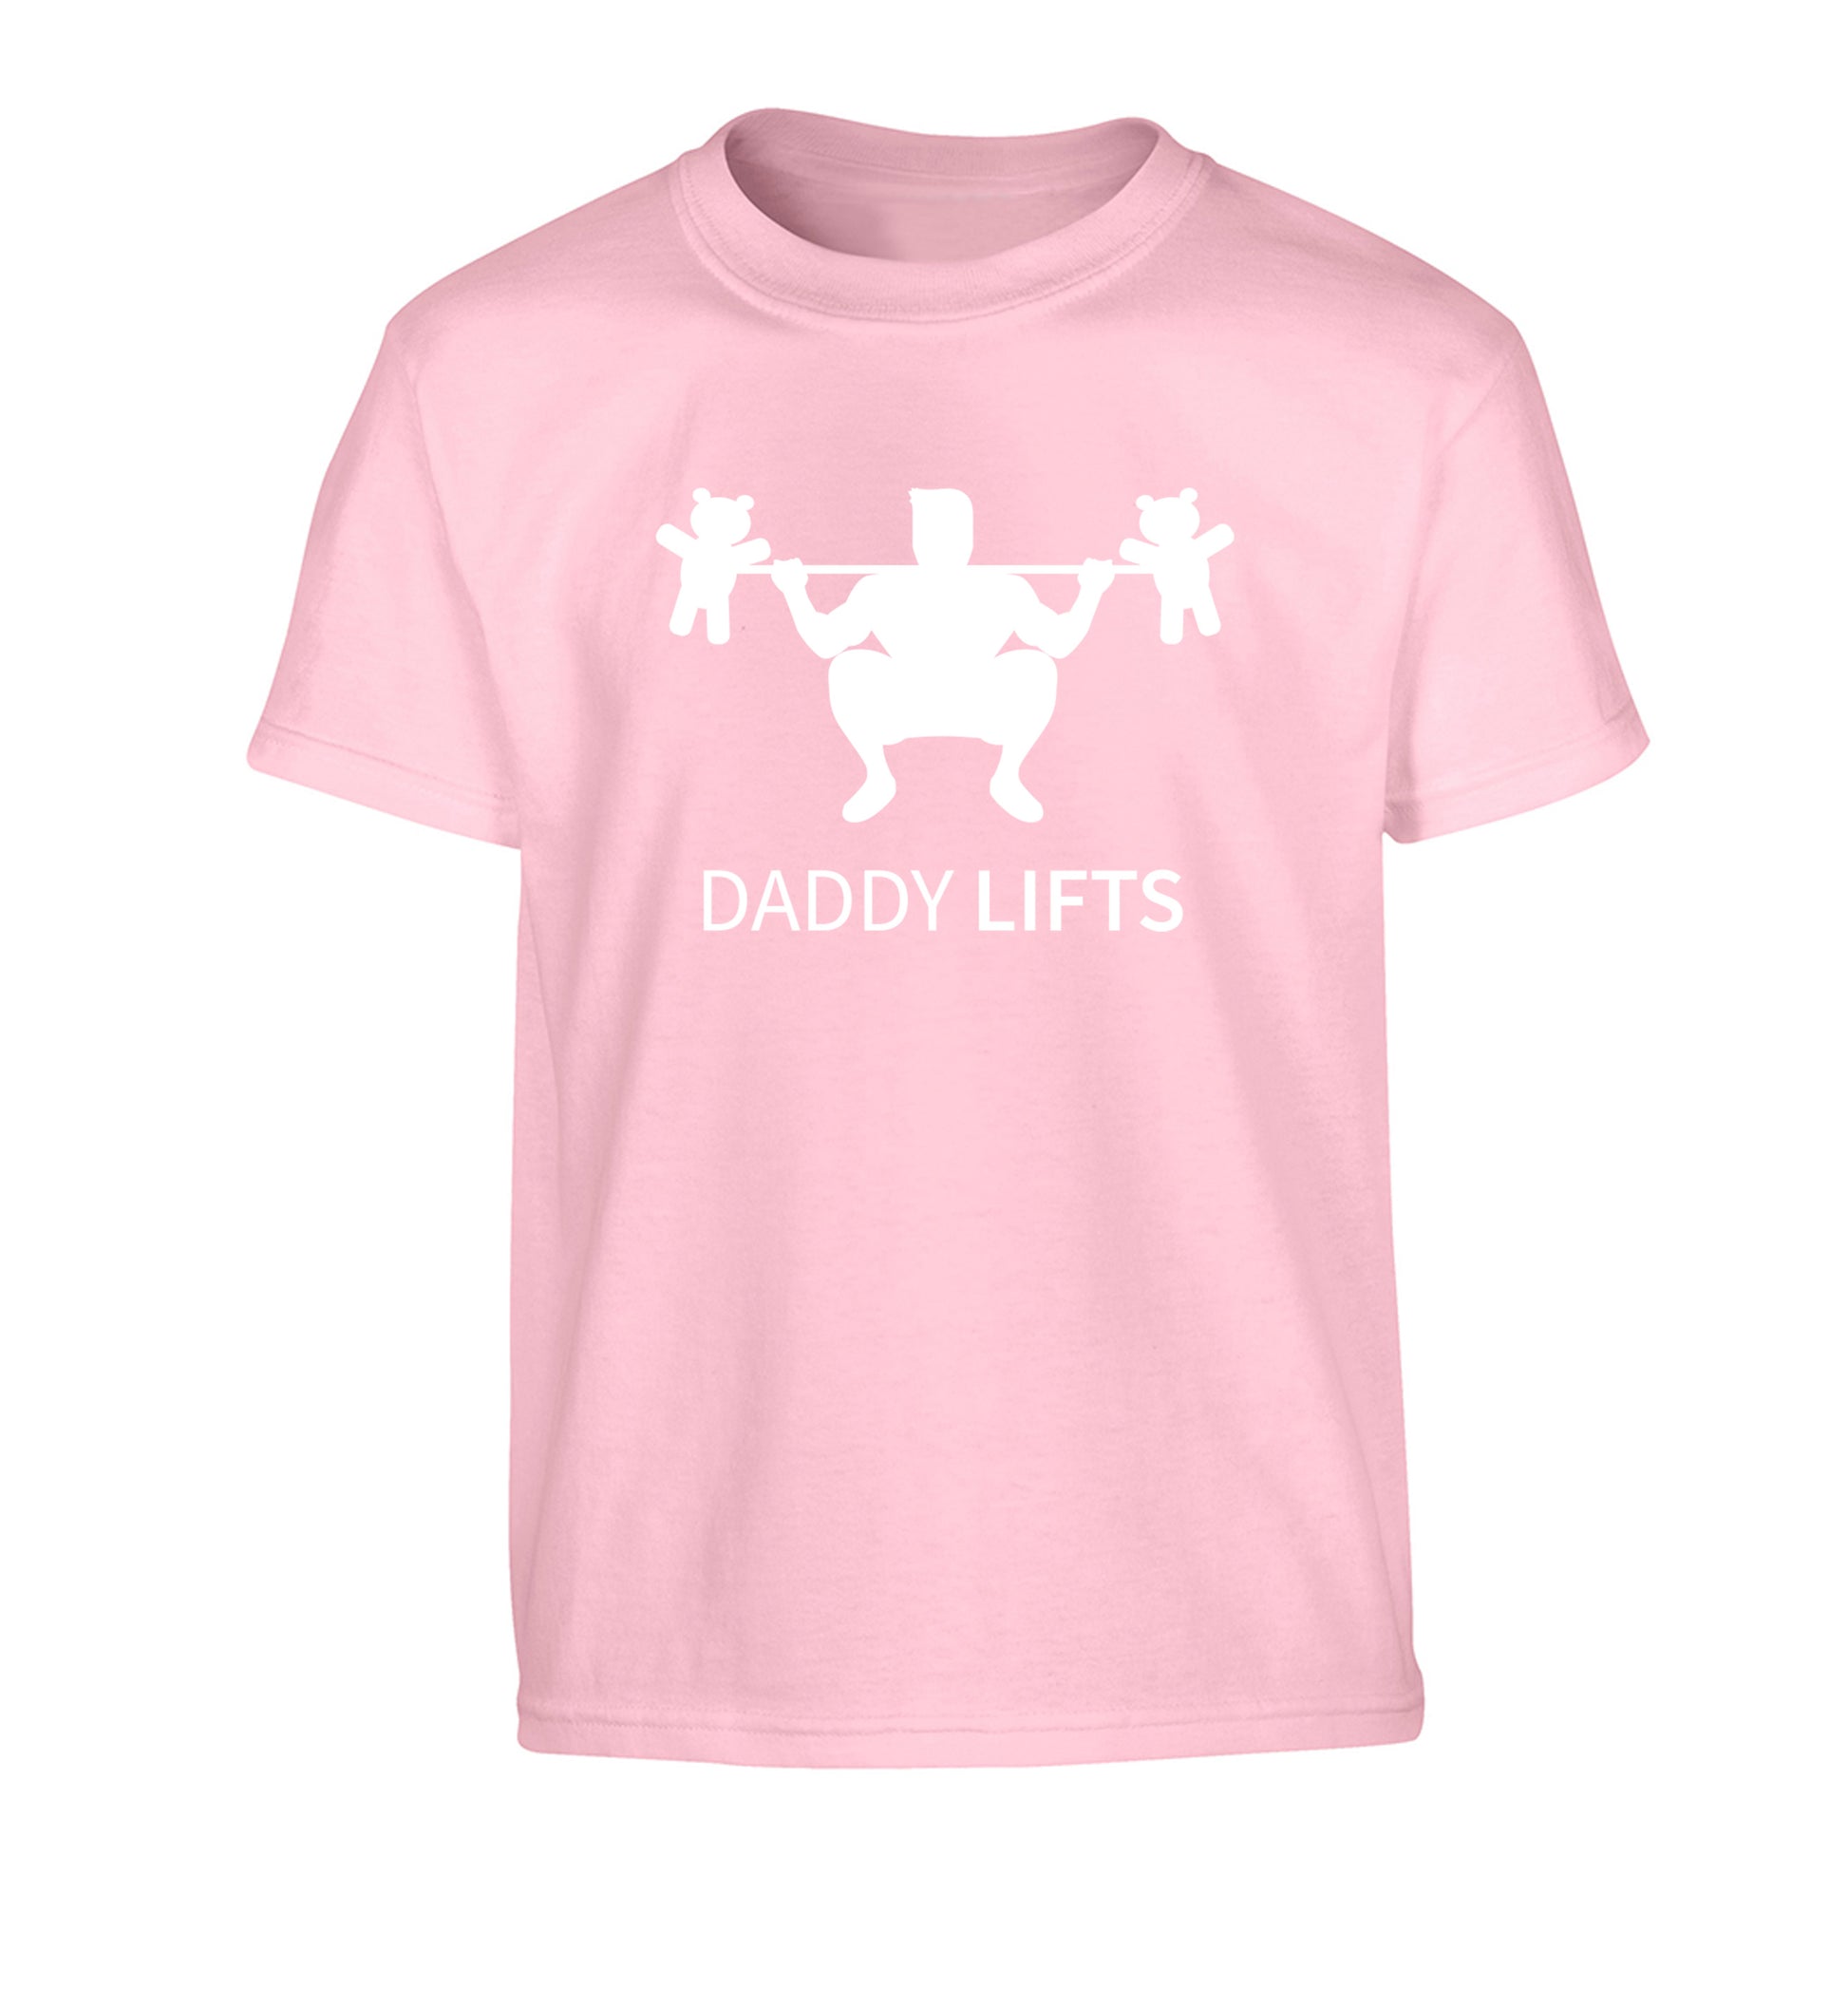 Daddy lifts Children's light pink Tshirt 12-13 Years